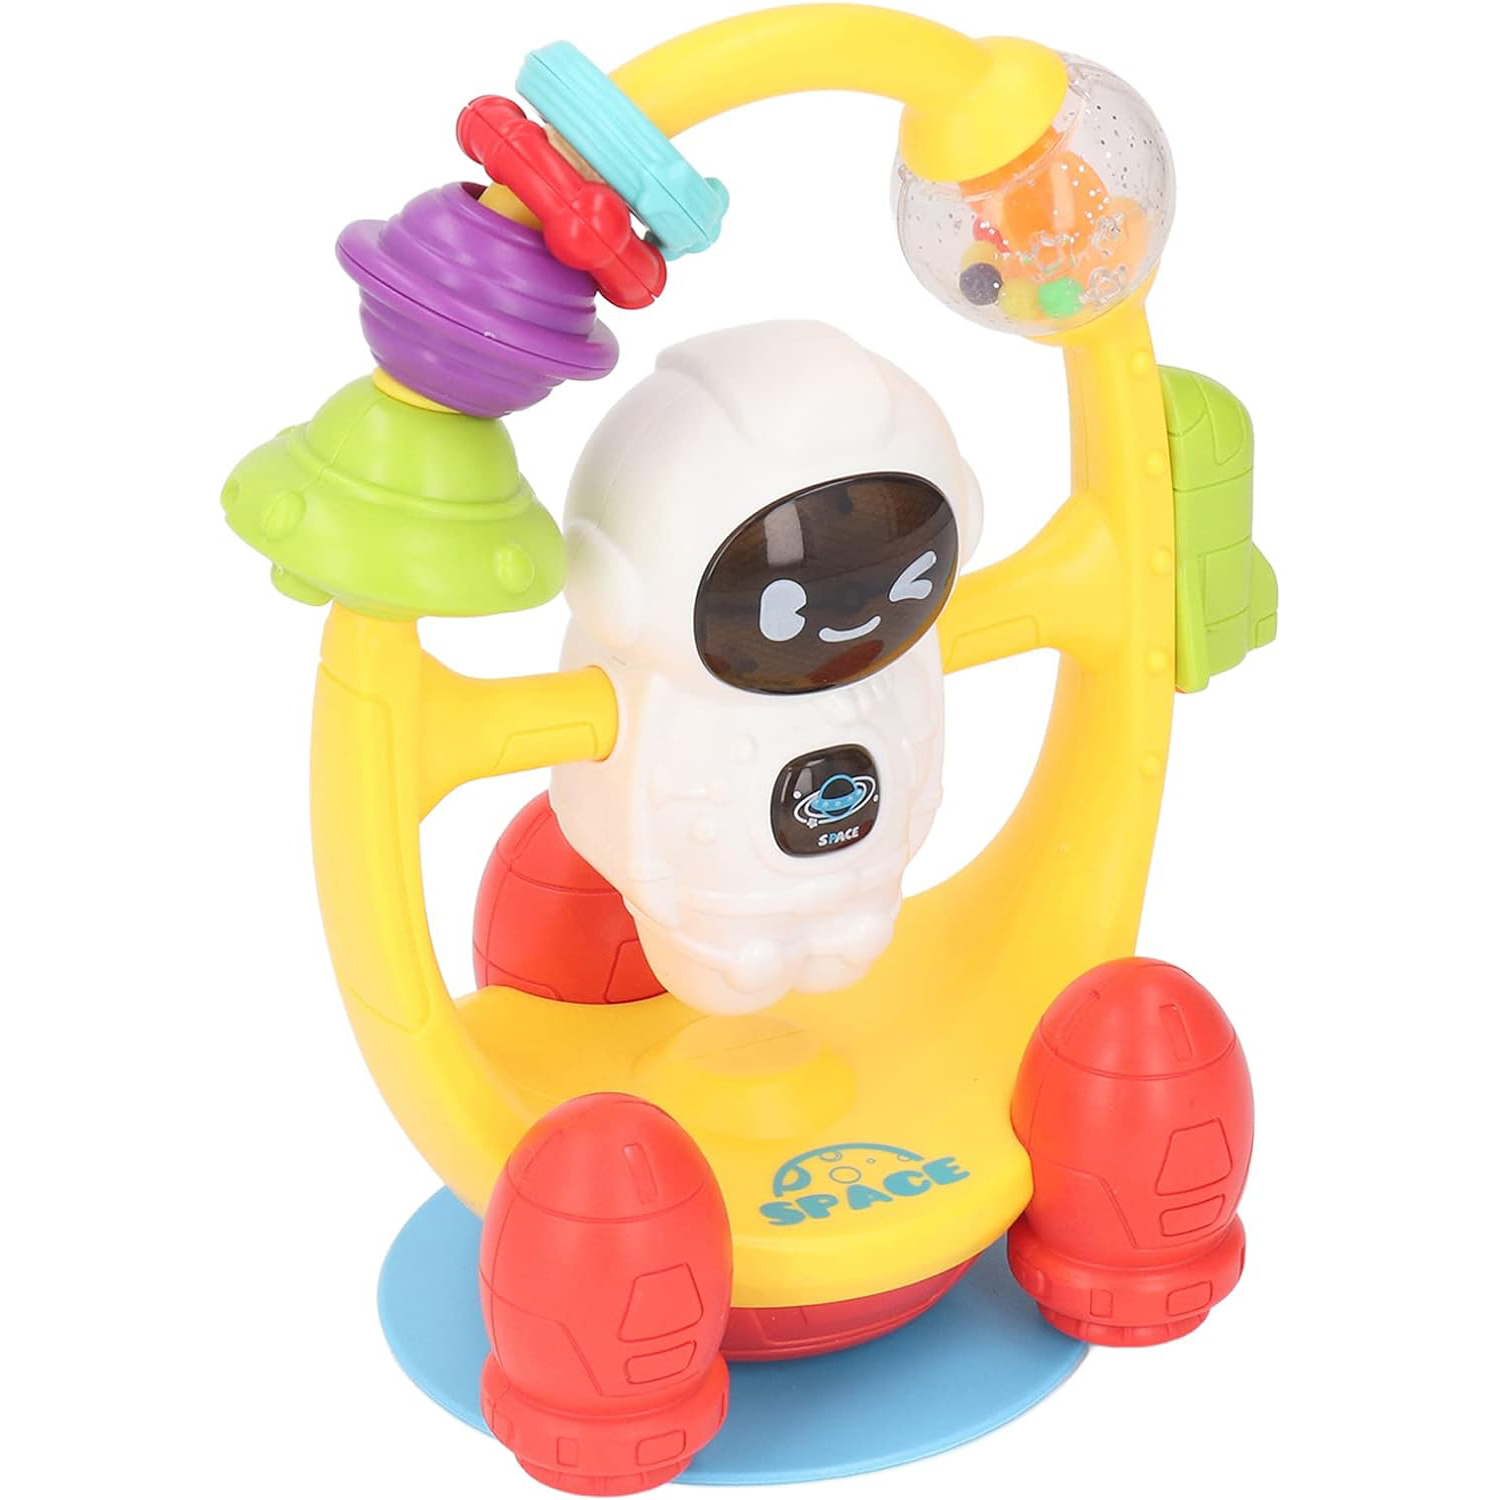 Jucarie interactiva pentru bebelusi, Astronaut rotativ cu sunete lumini, Montessori, Galben